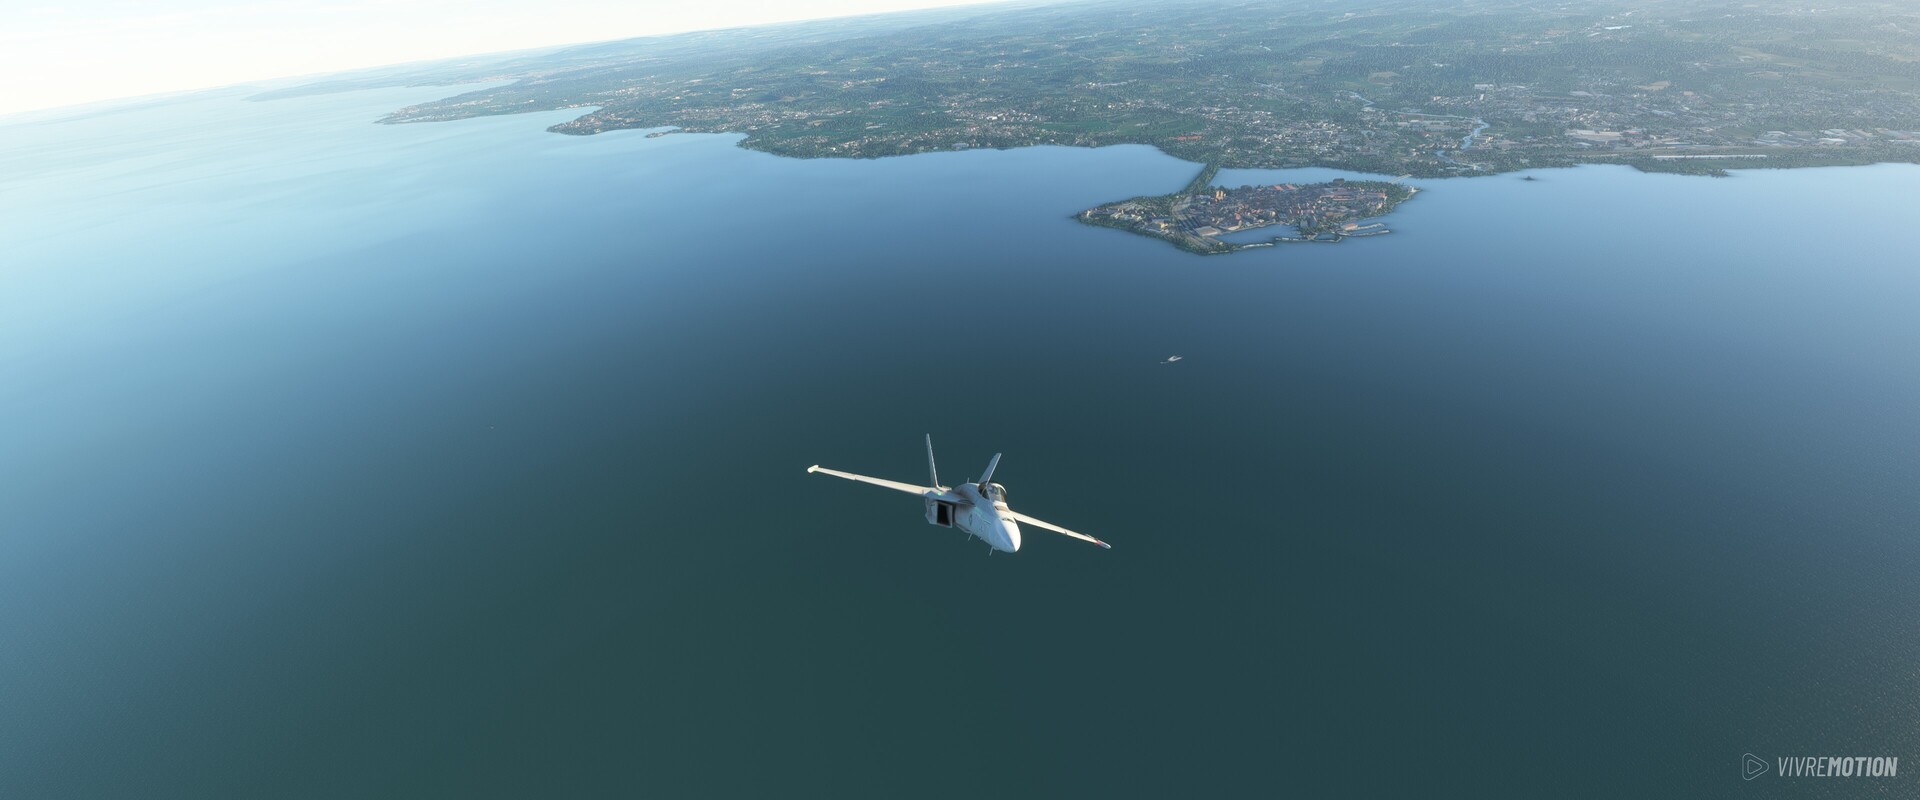 Germany Bodensee Lake Constance - Boeing F/A-18 Super Hornet - Microsoft Flight Simulator - VIVRE-MOTION